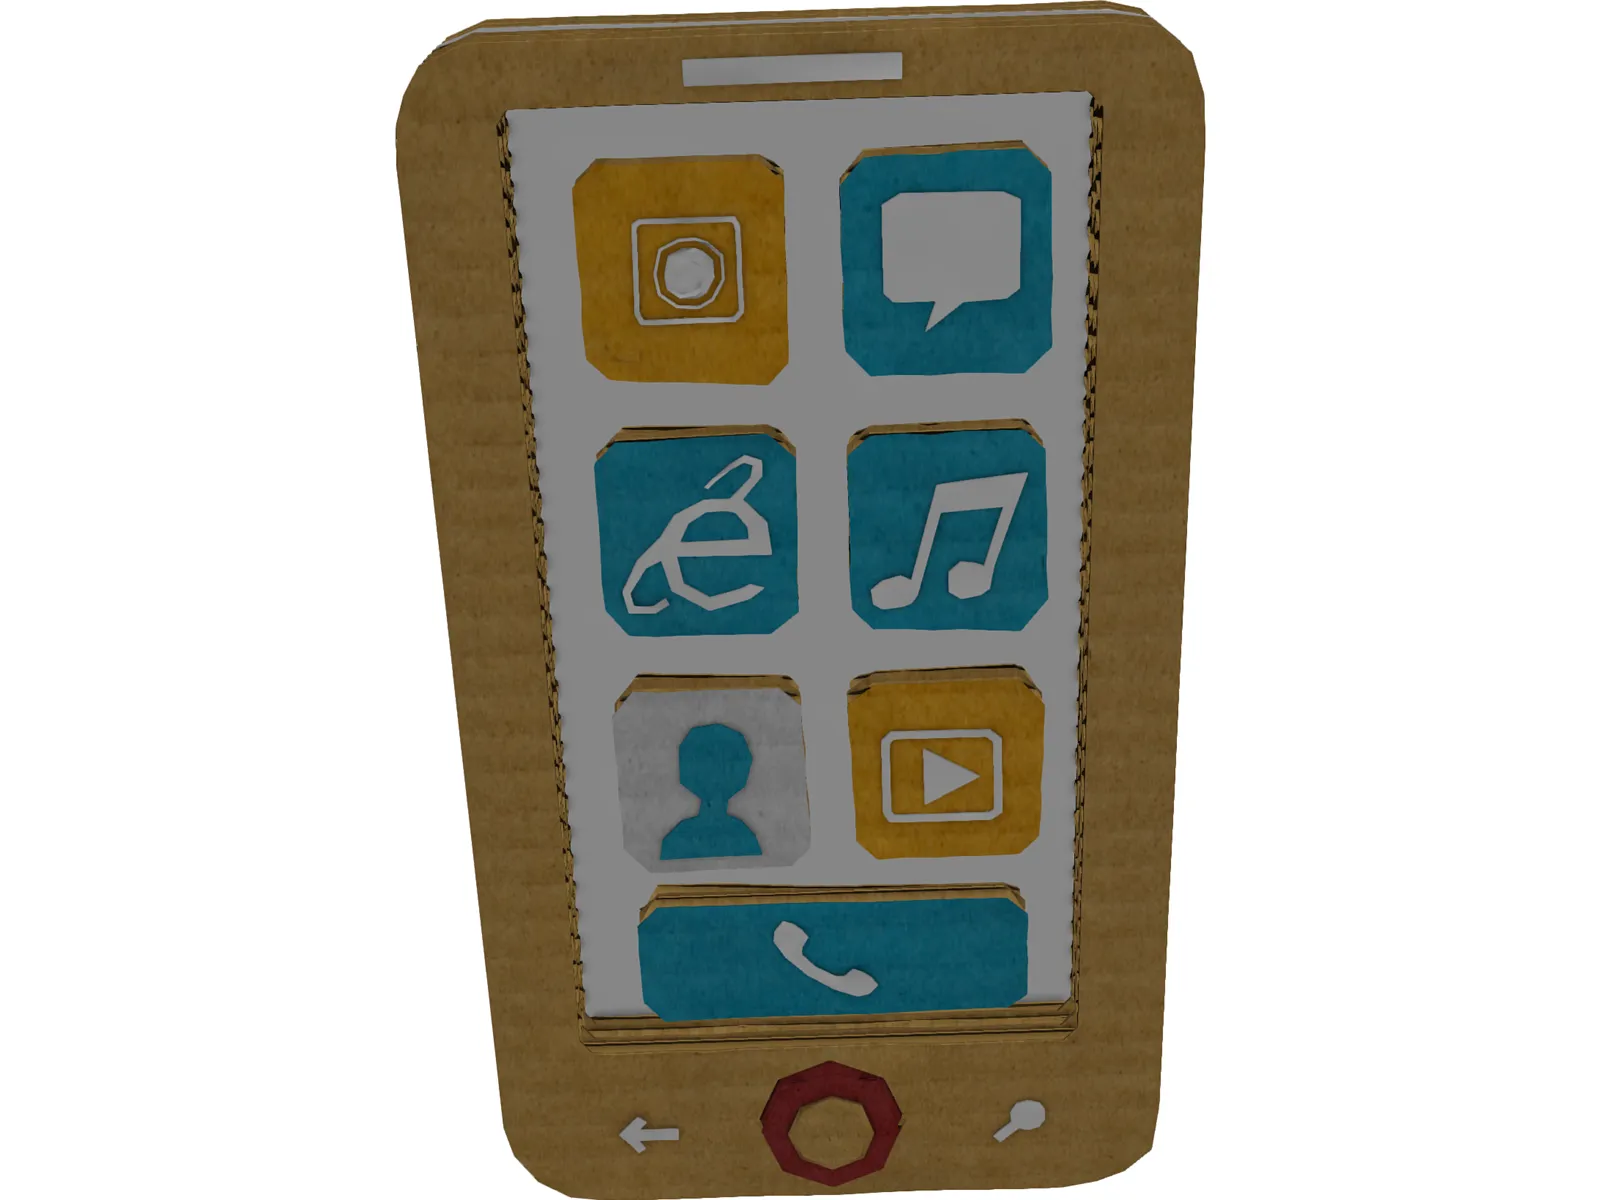 Mobile Cardboard Phone 3D Model